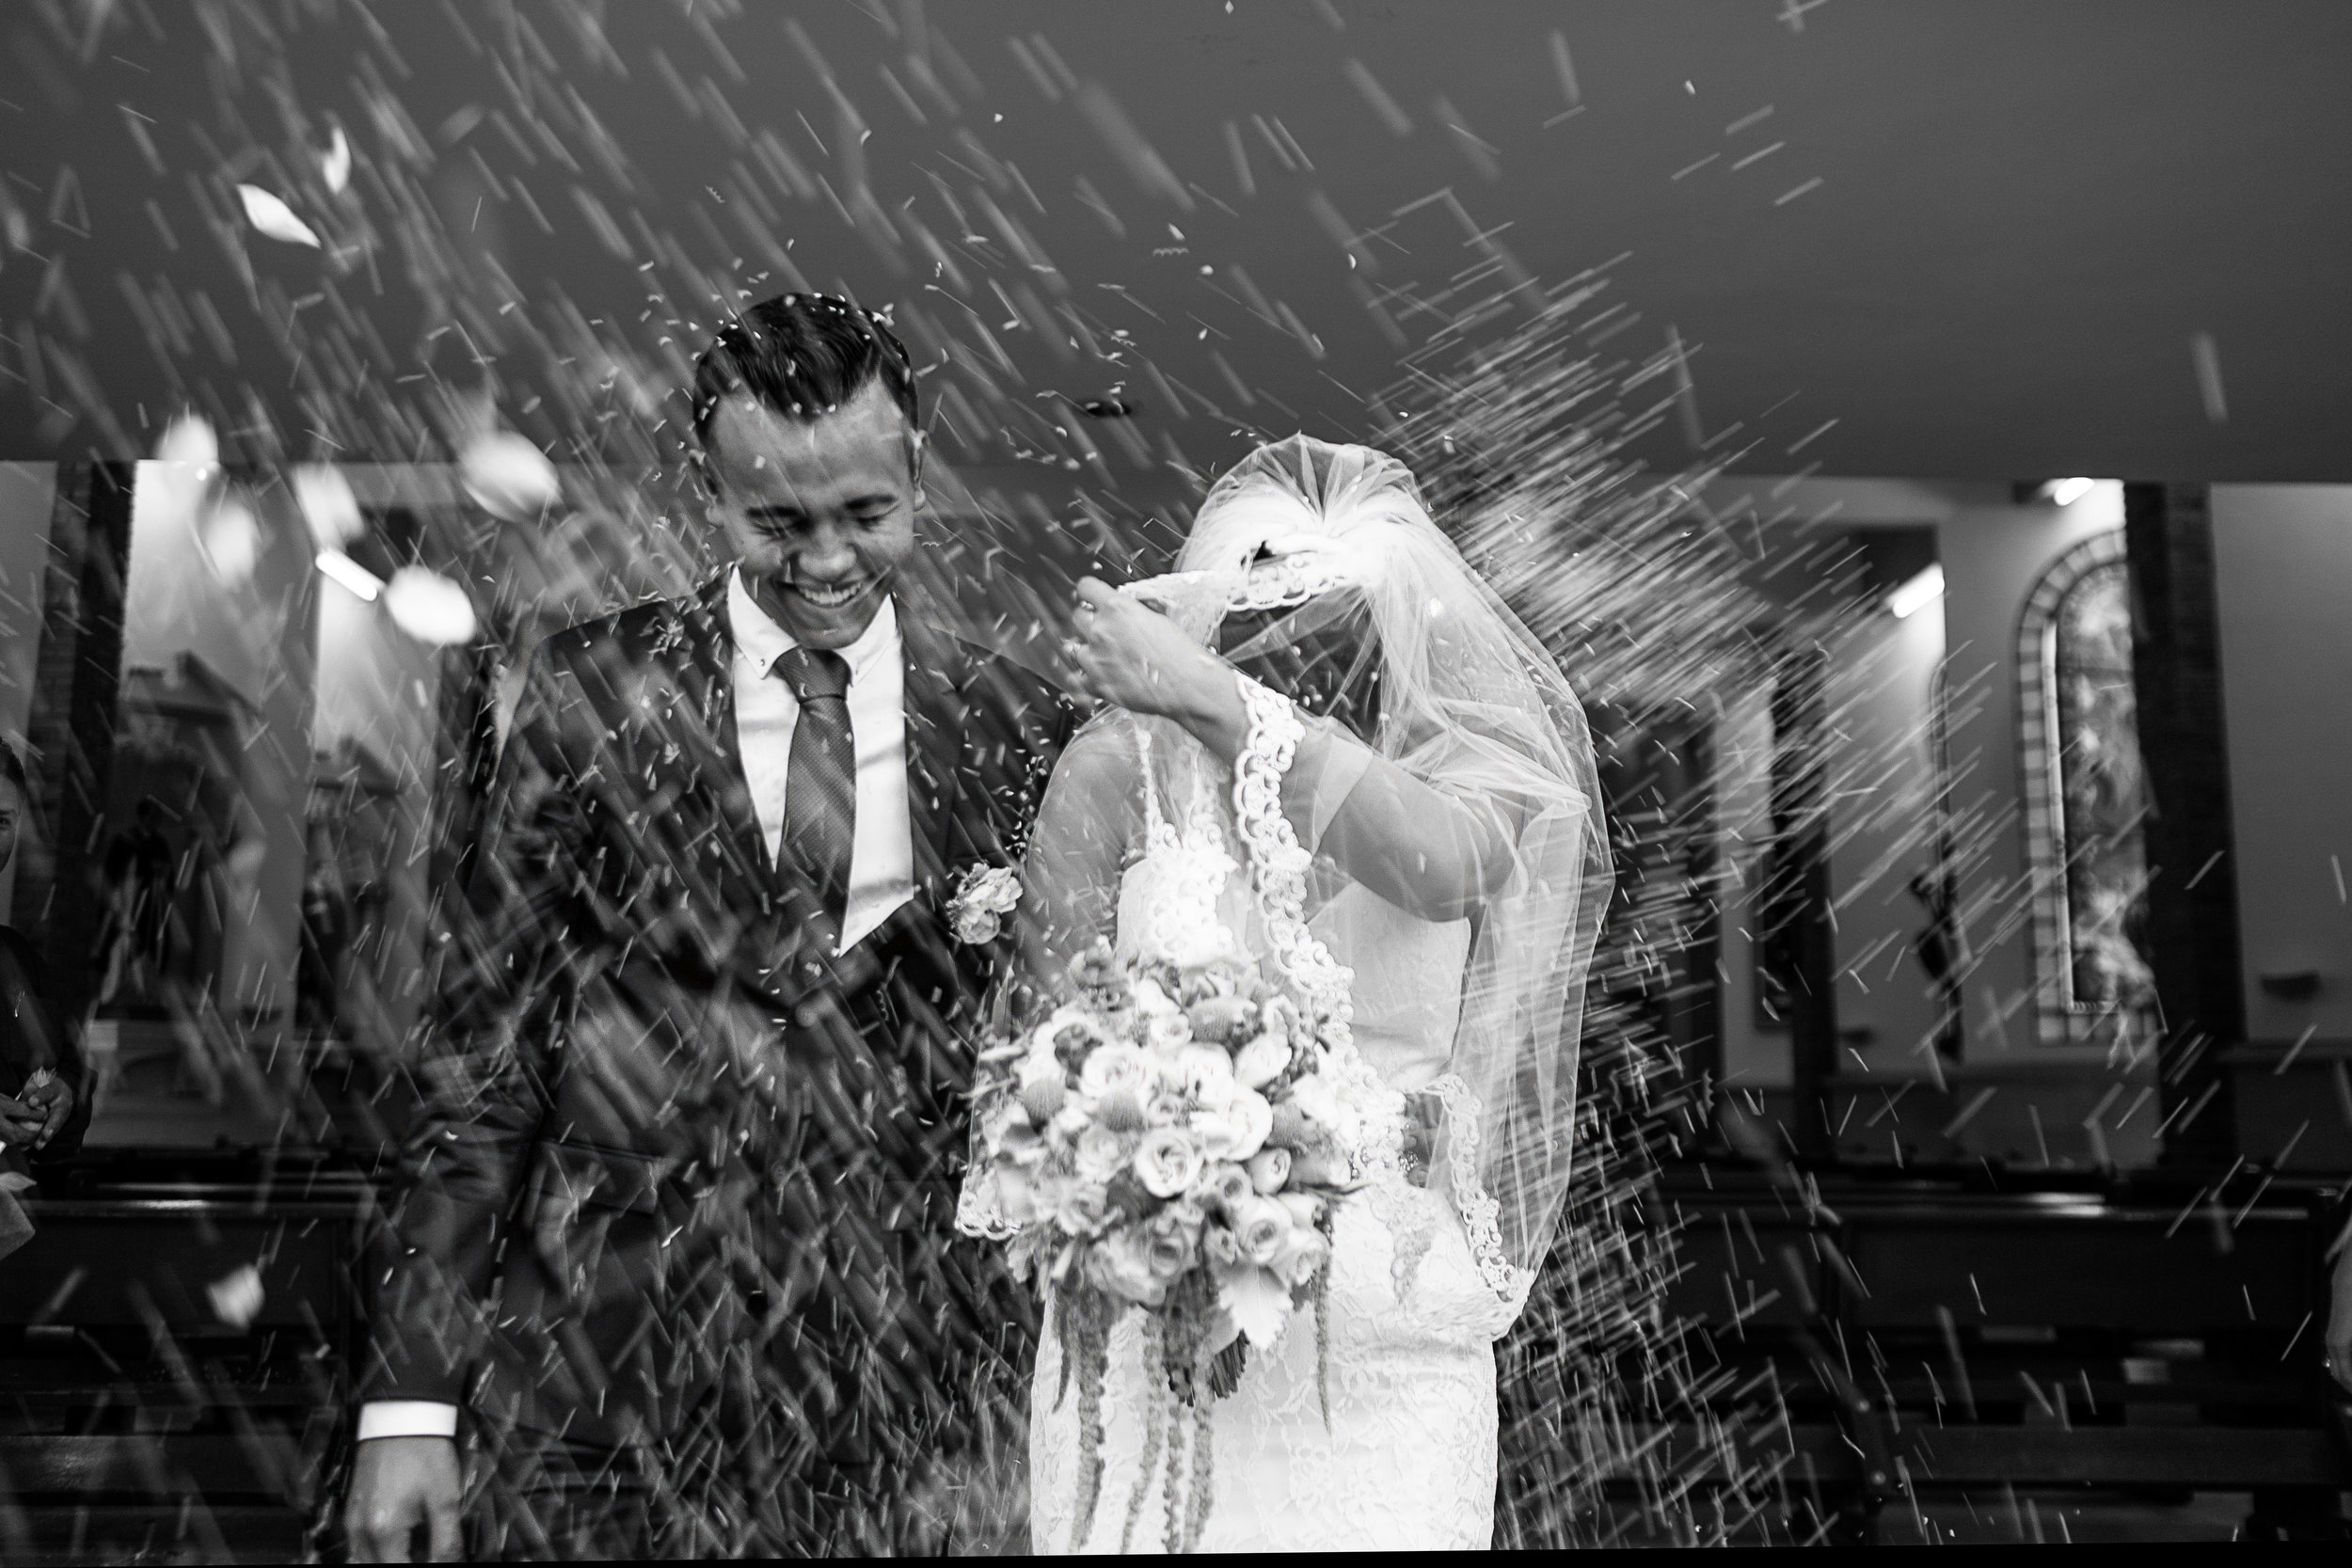 Lluvia de arroz a la salida de la feliz pareja al terminar su ceremonia religiosa de boda